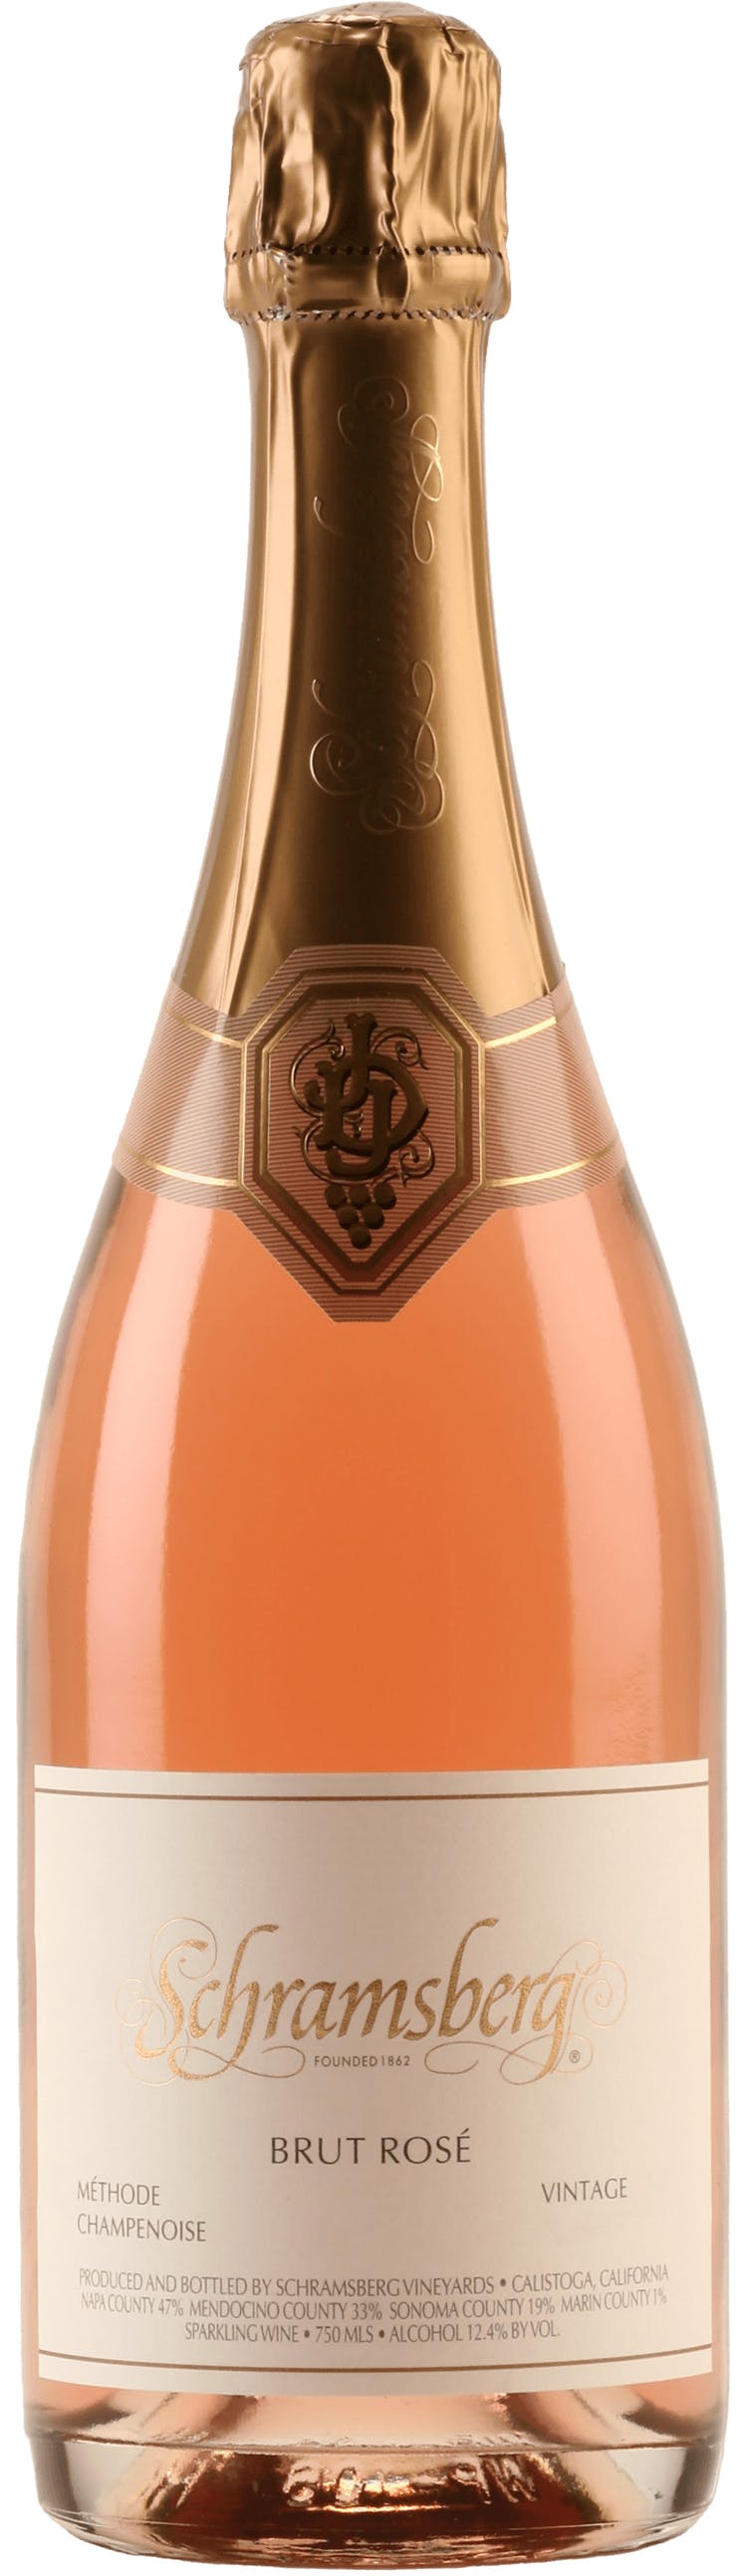 Moët & Chandon - Brut Rosé Champagne - Gift Box - Charles Street Liquors